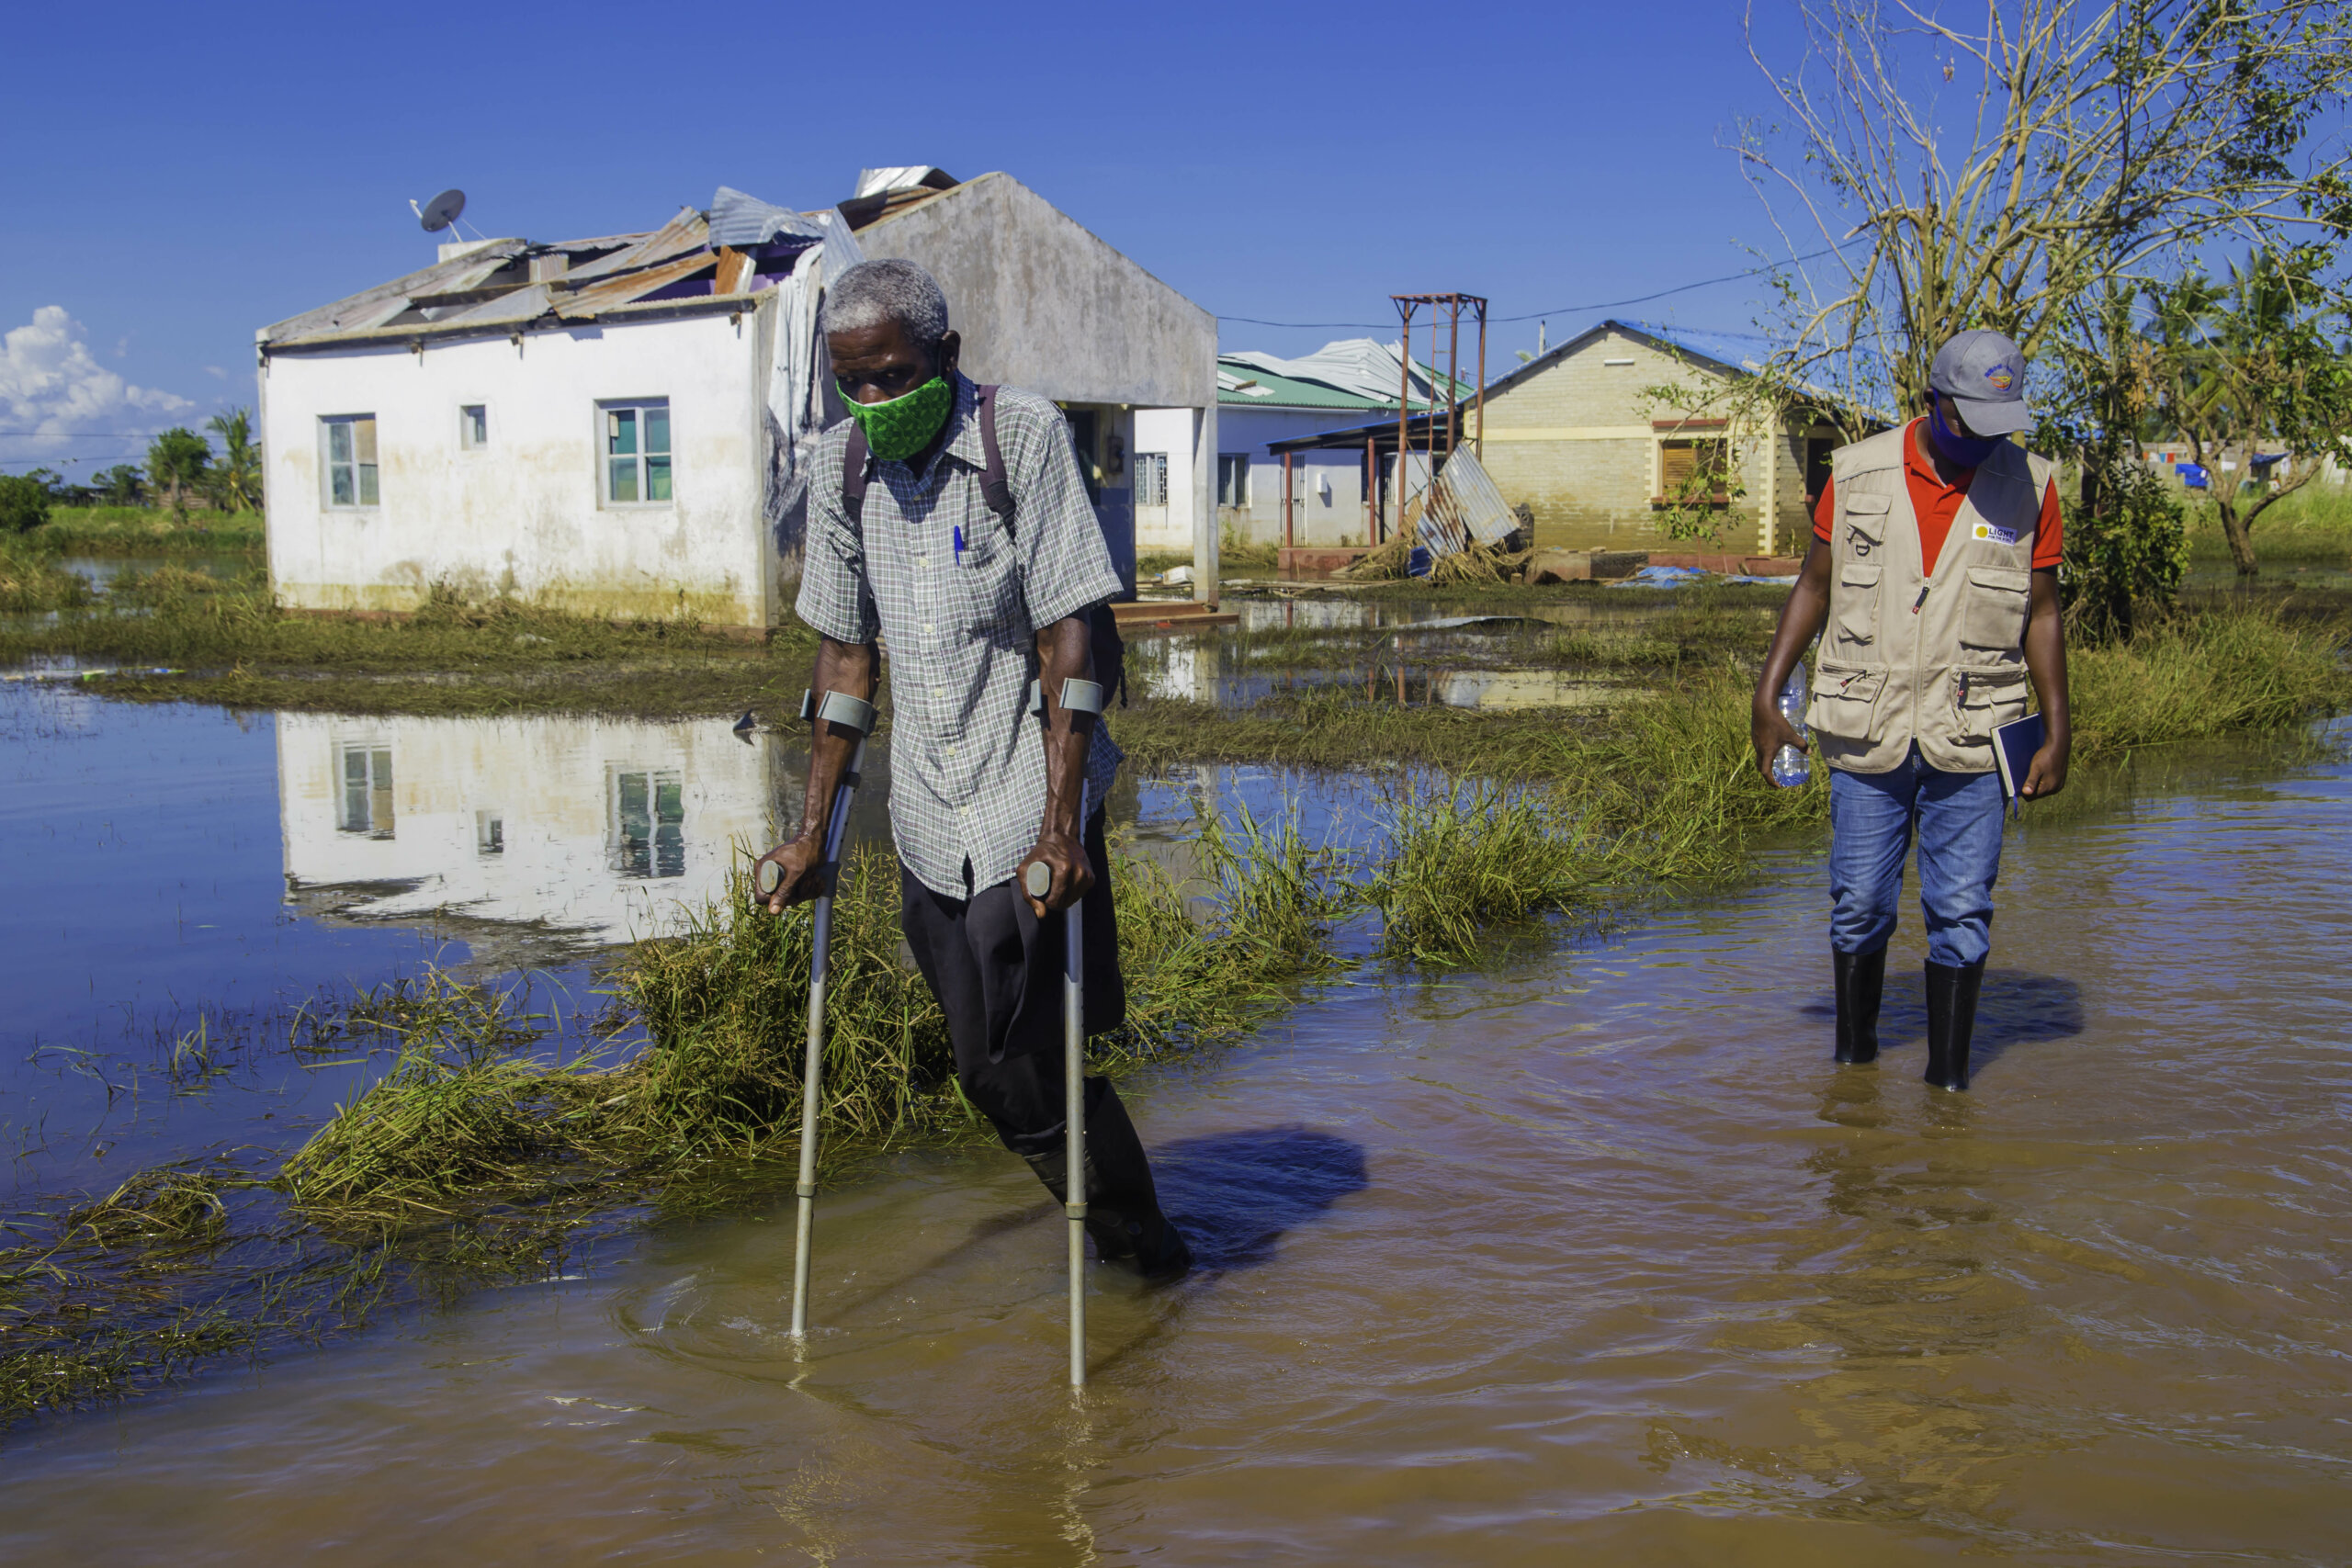 An elderly man with crutches struggles to walk through floods